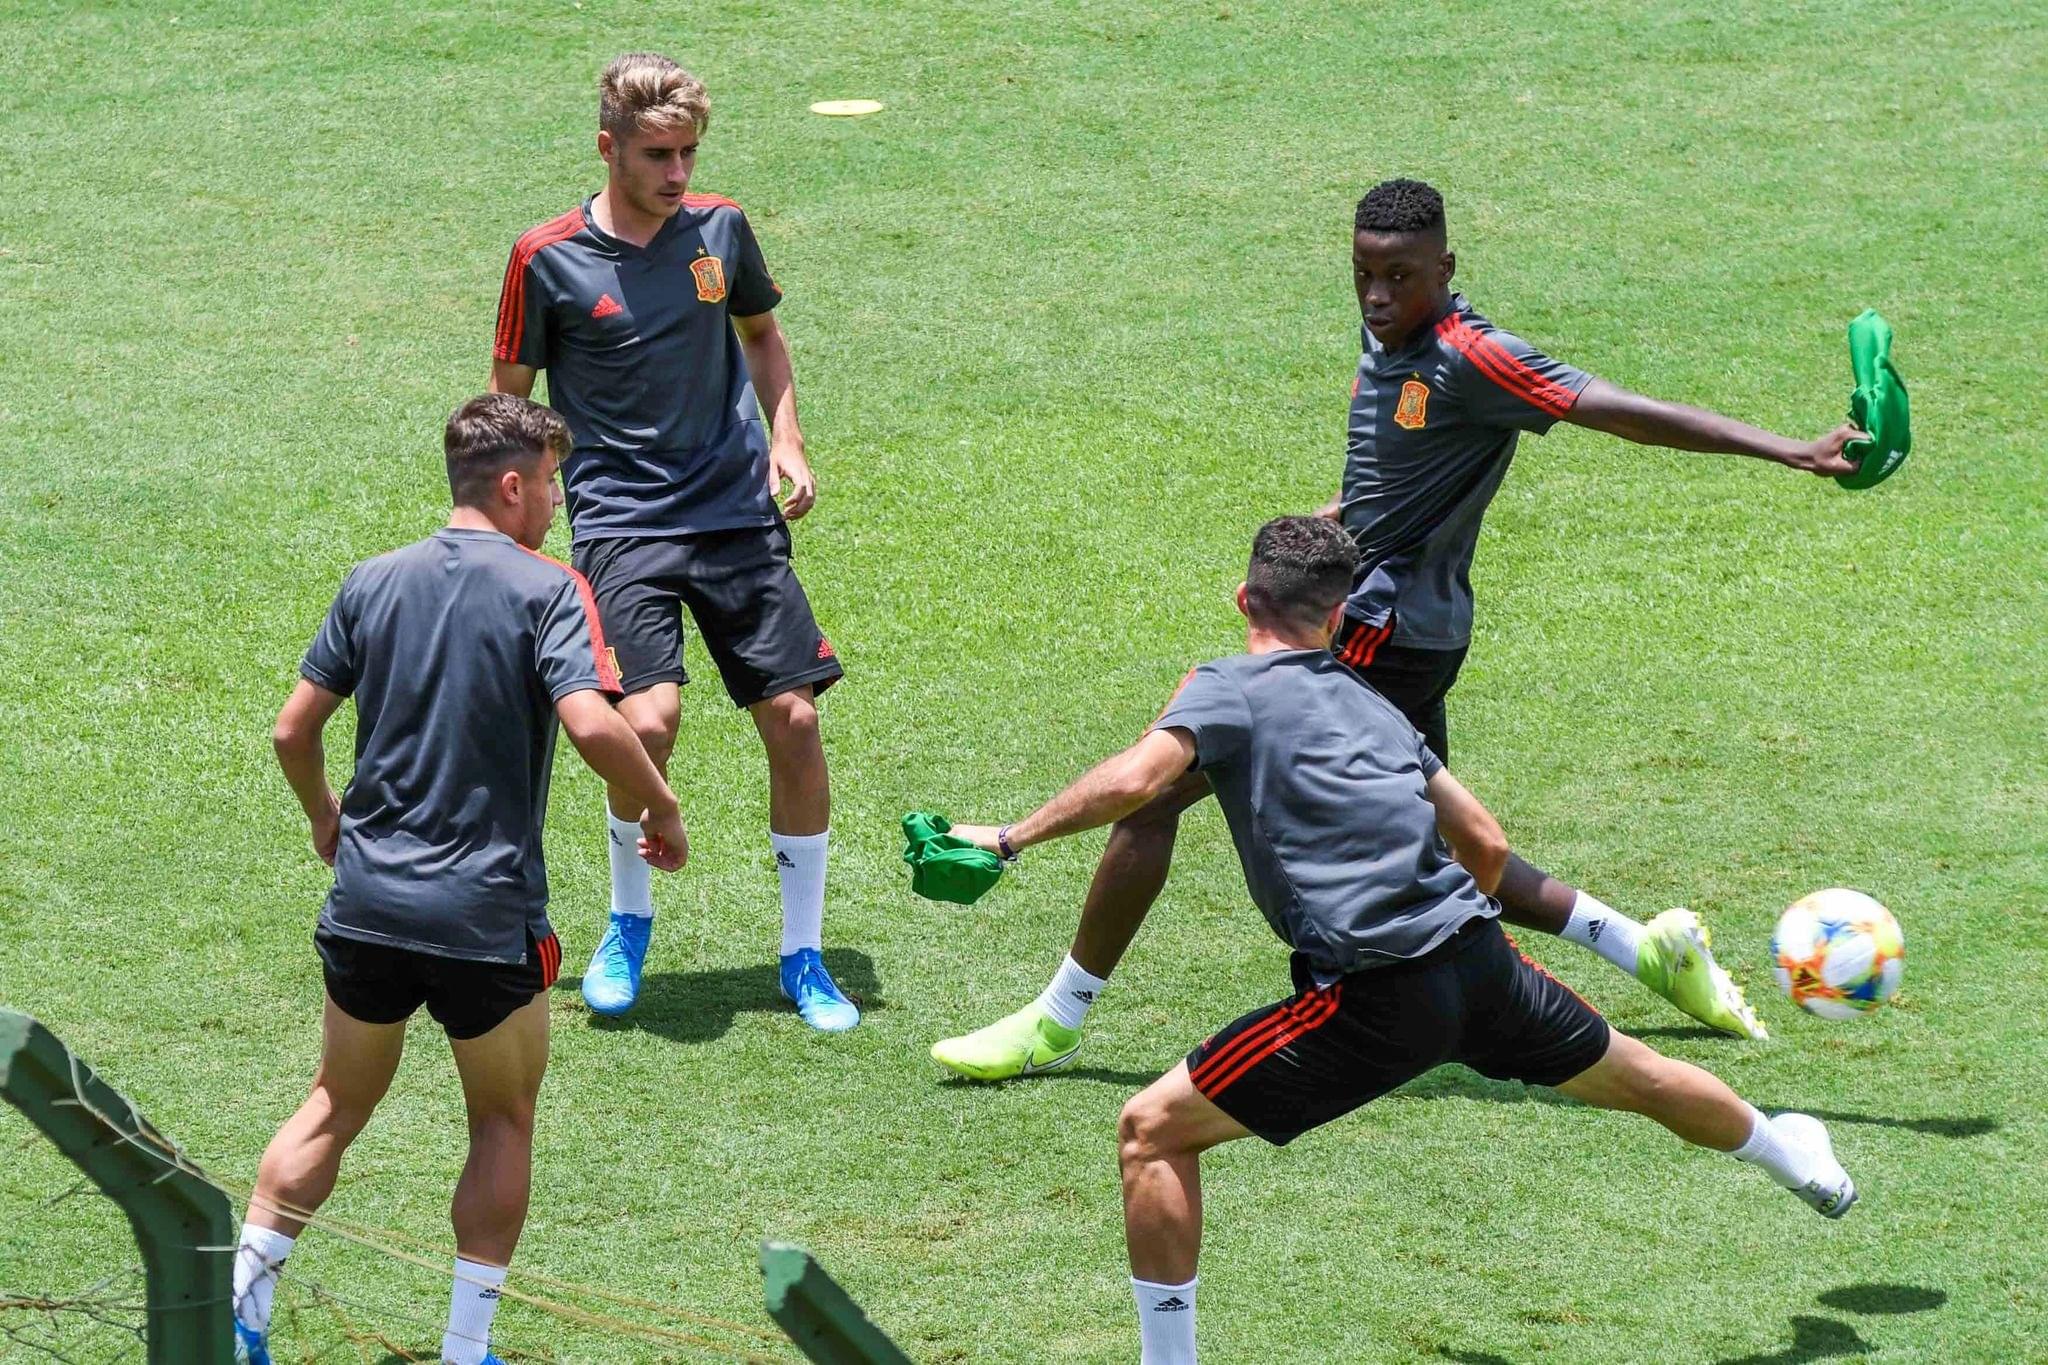 Spain U17 team is having a training